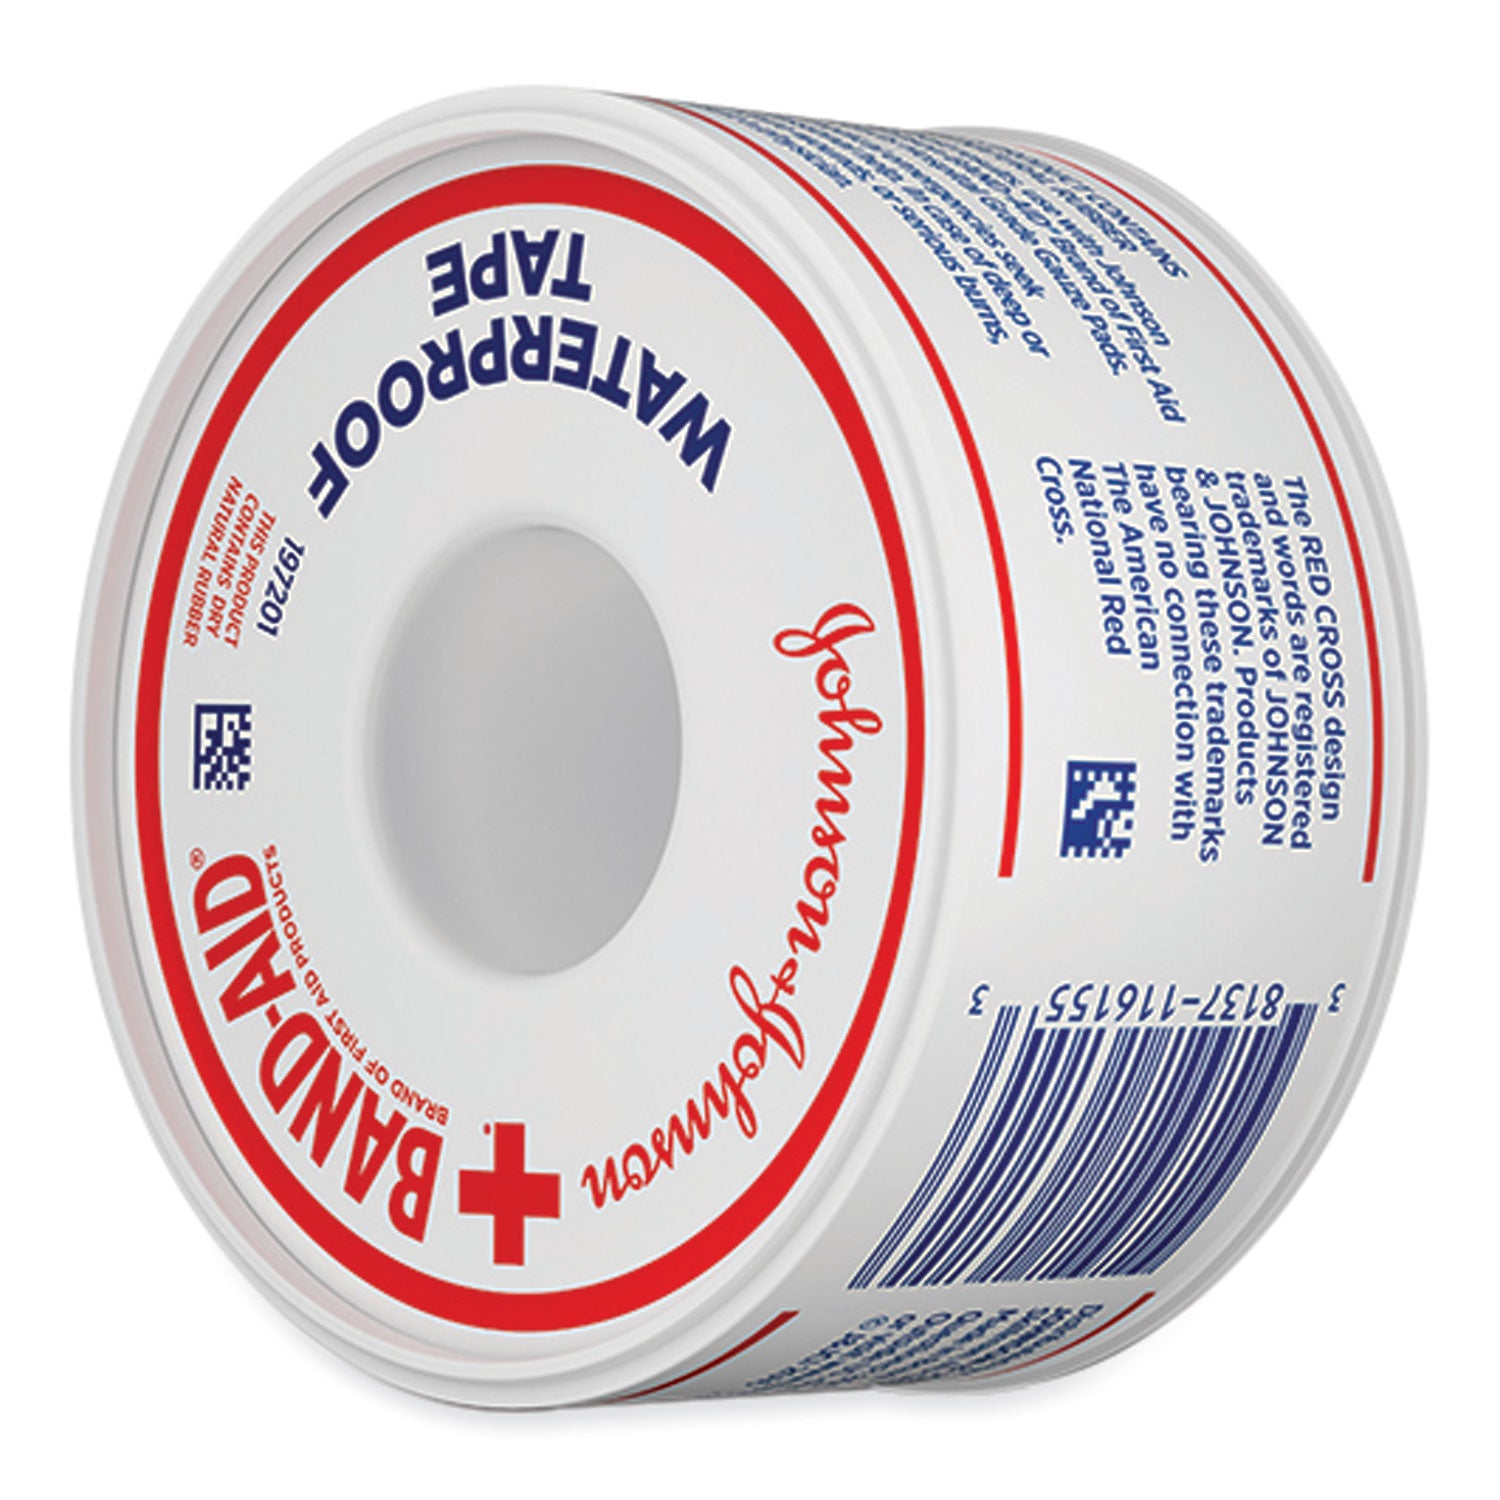 water-block-waterproof-medical-tape-dry-rubber-1-x-10-yds-white_joj117121 - 1